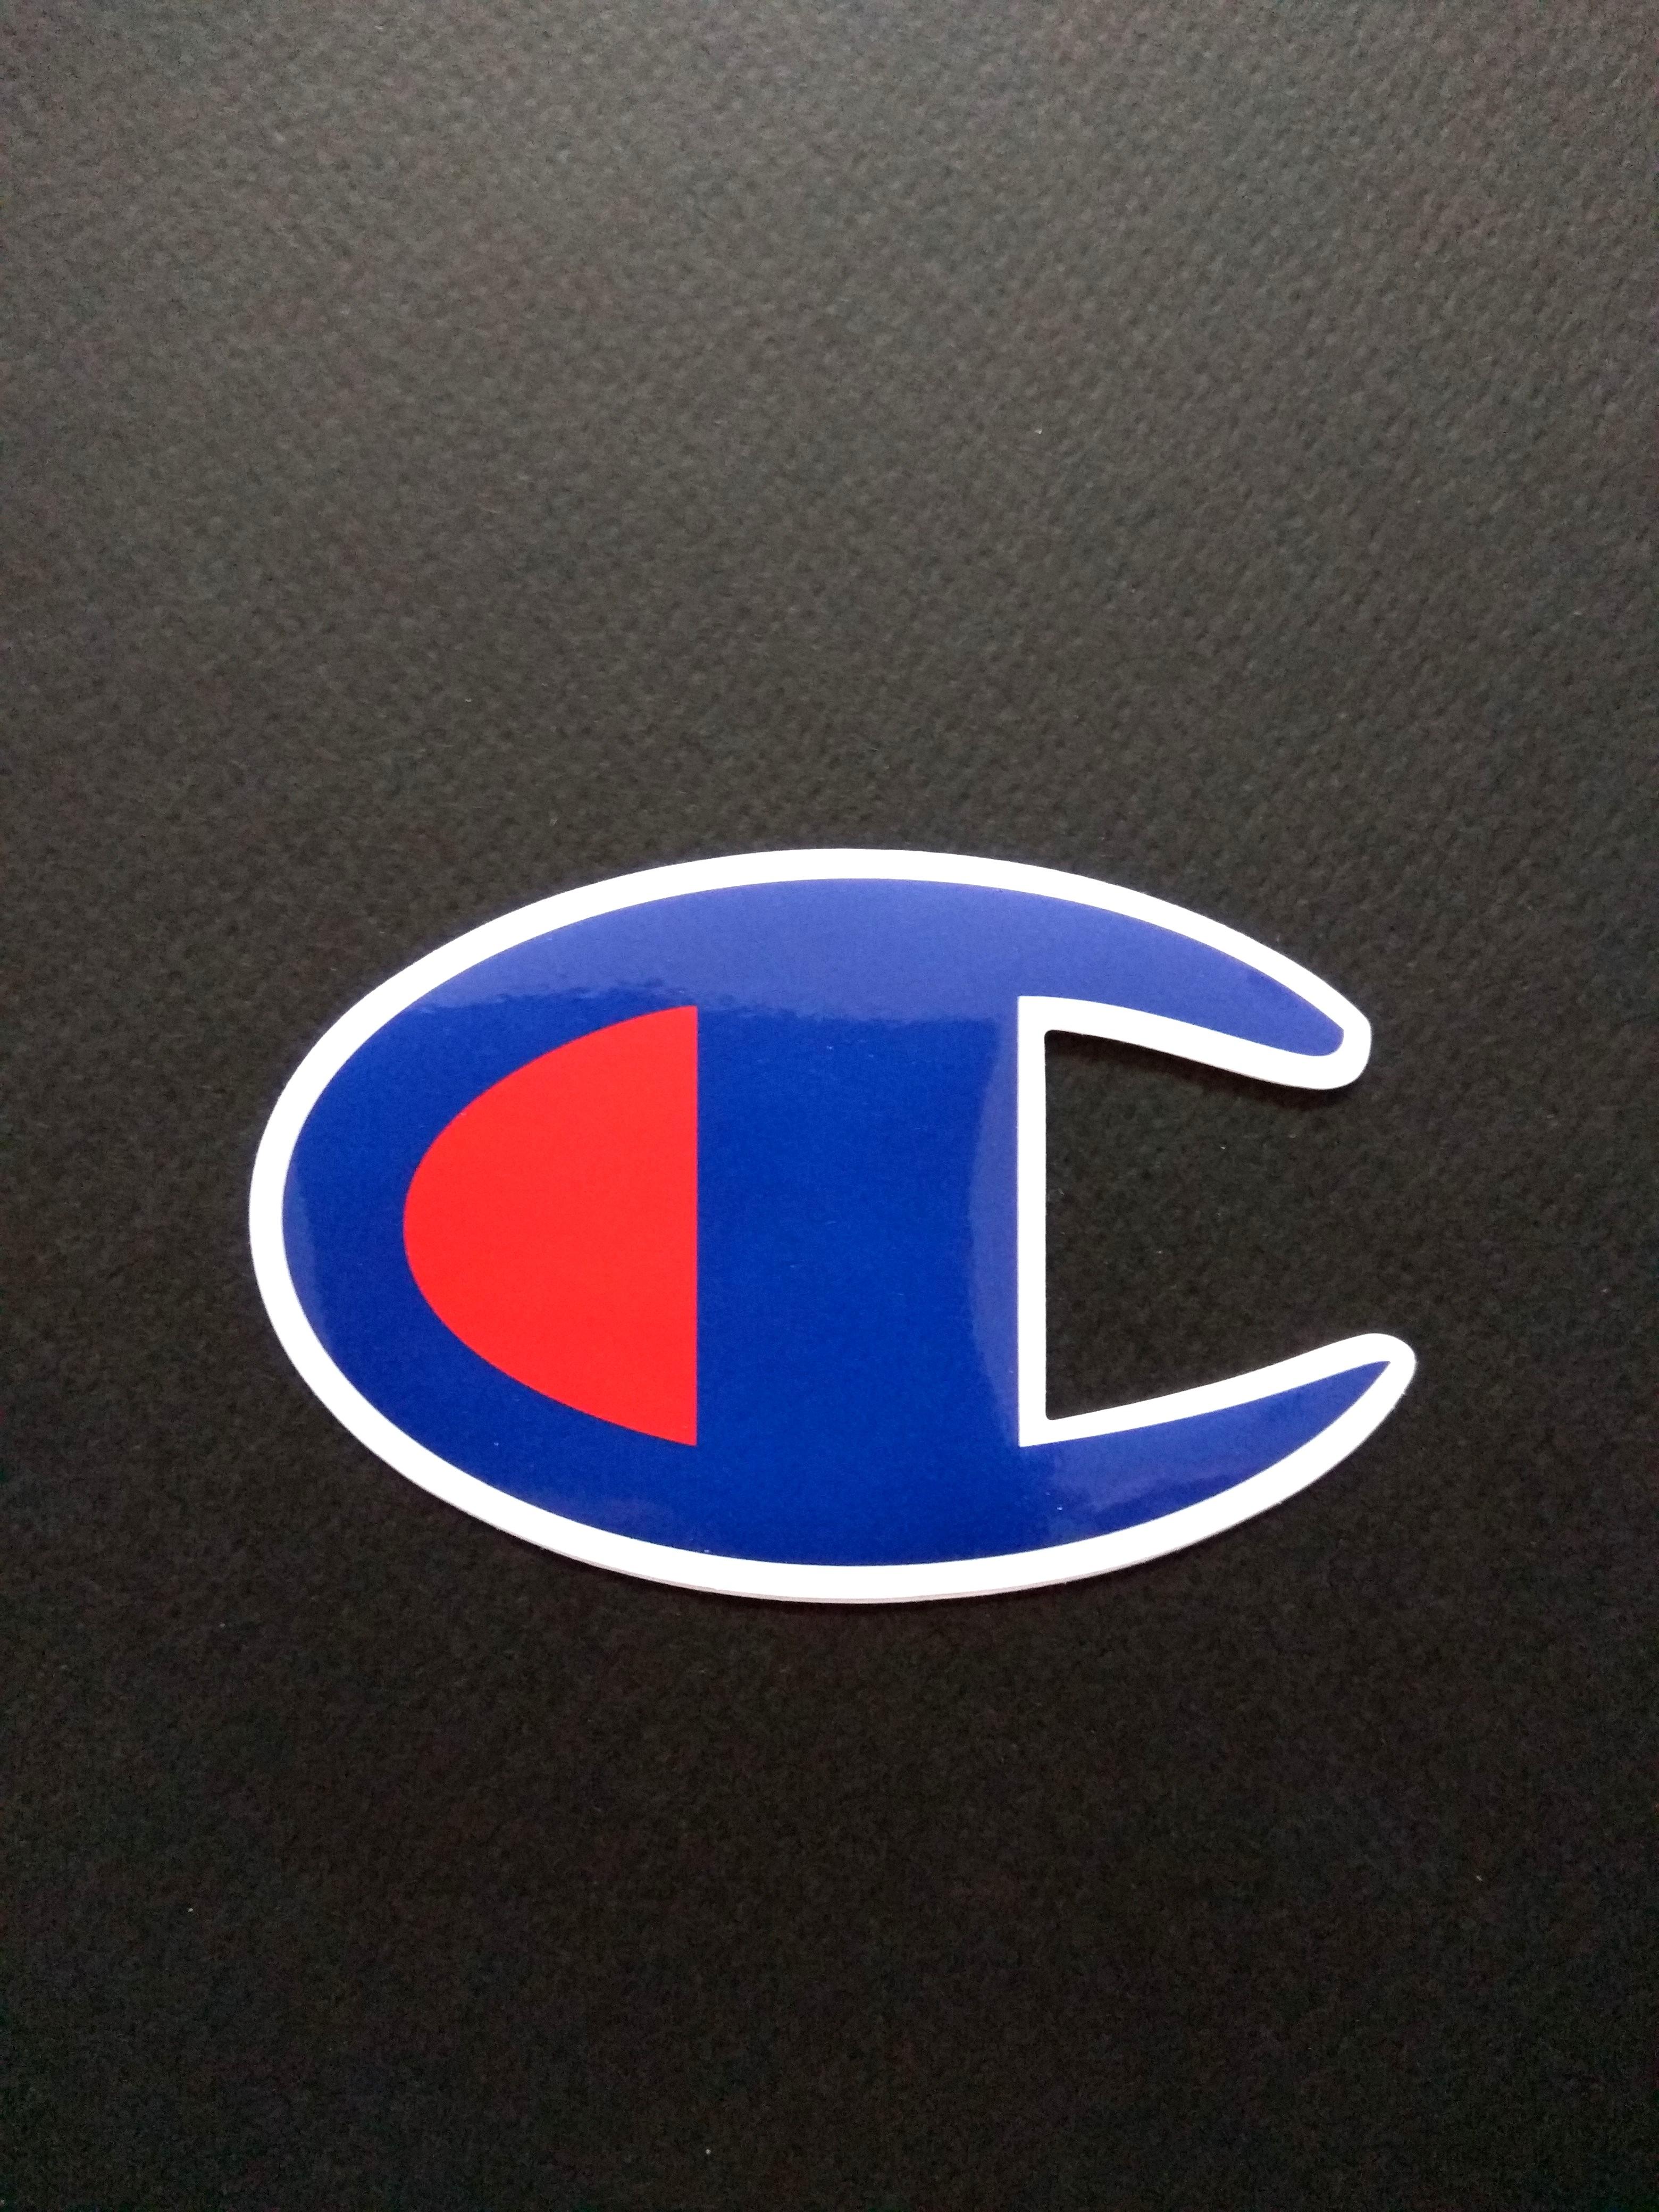 new champion logo